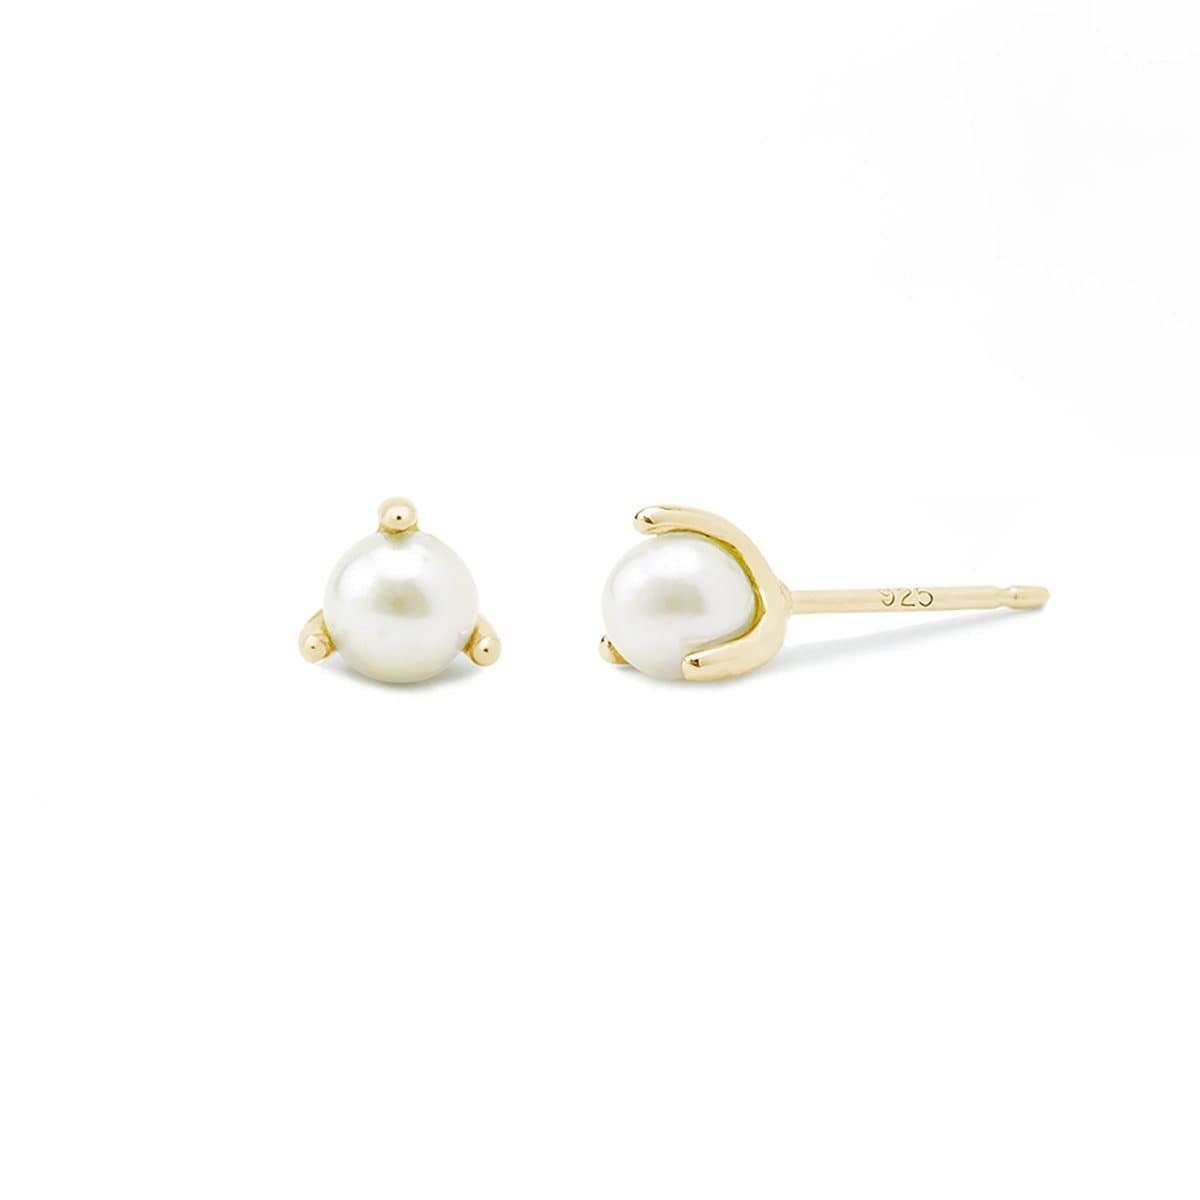 Boma Jewelry Earrings 14K Gold Vermeil Belle Pearl Studs